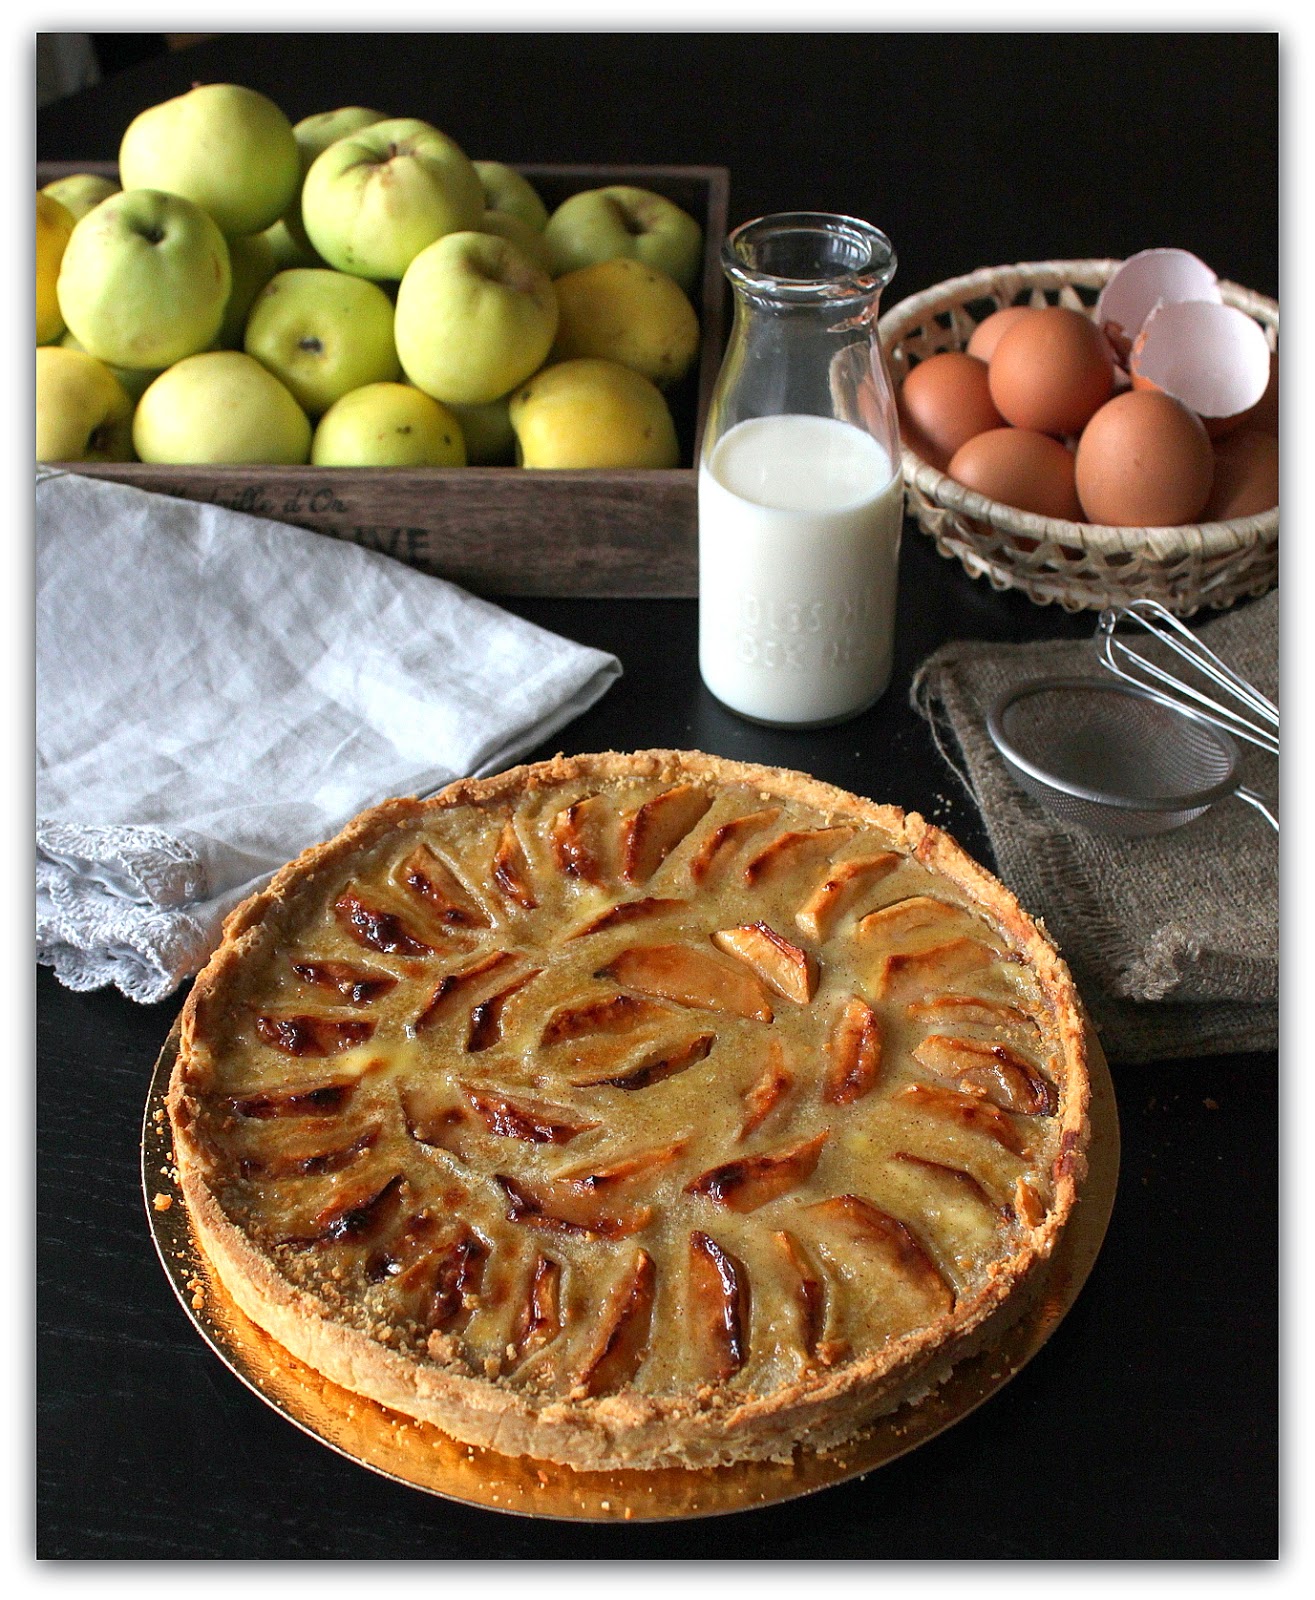 Тарт яблочный рецепт с фото | волшебная eда.ру